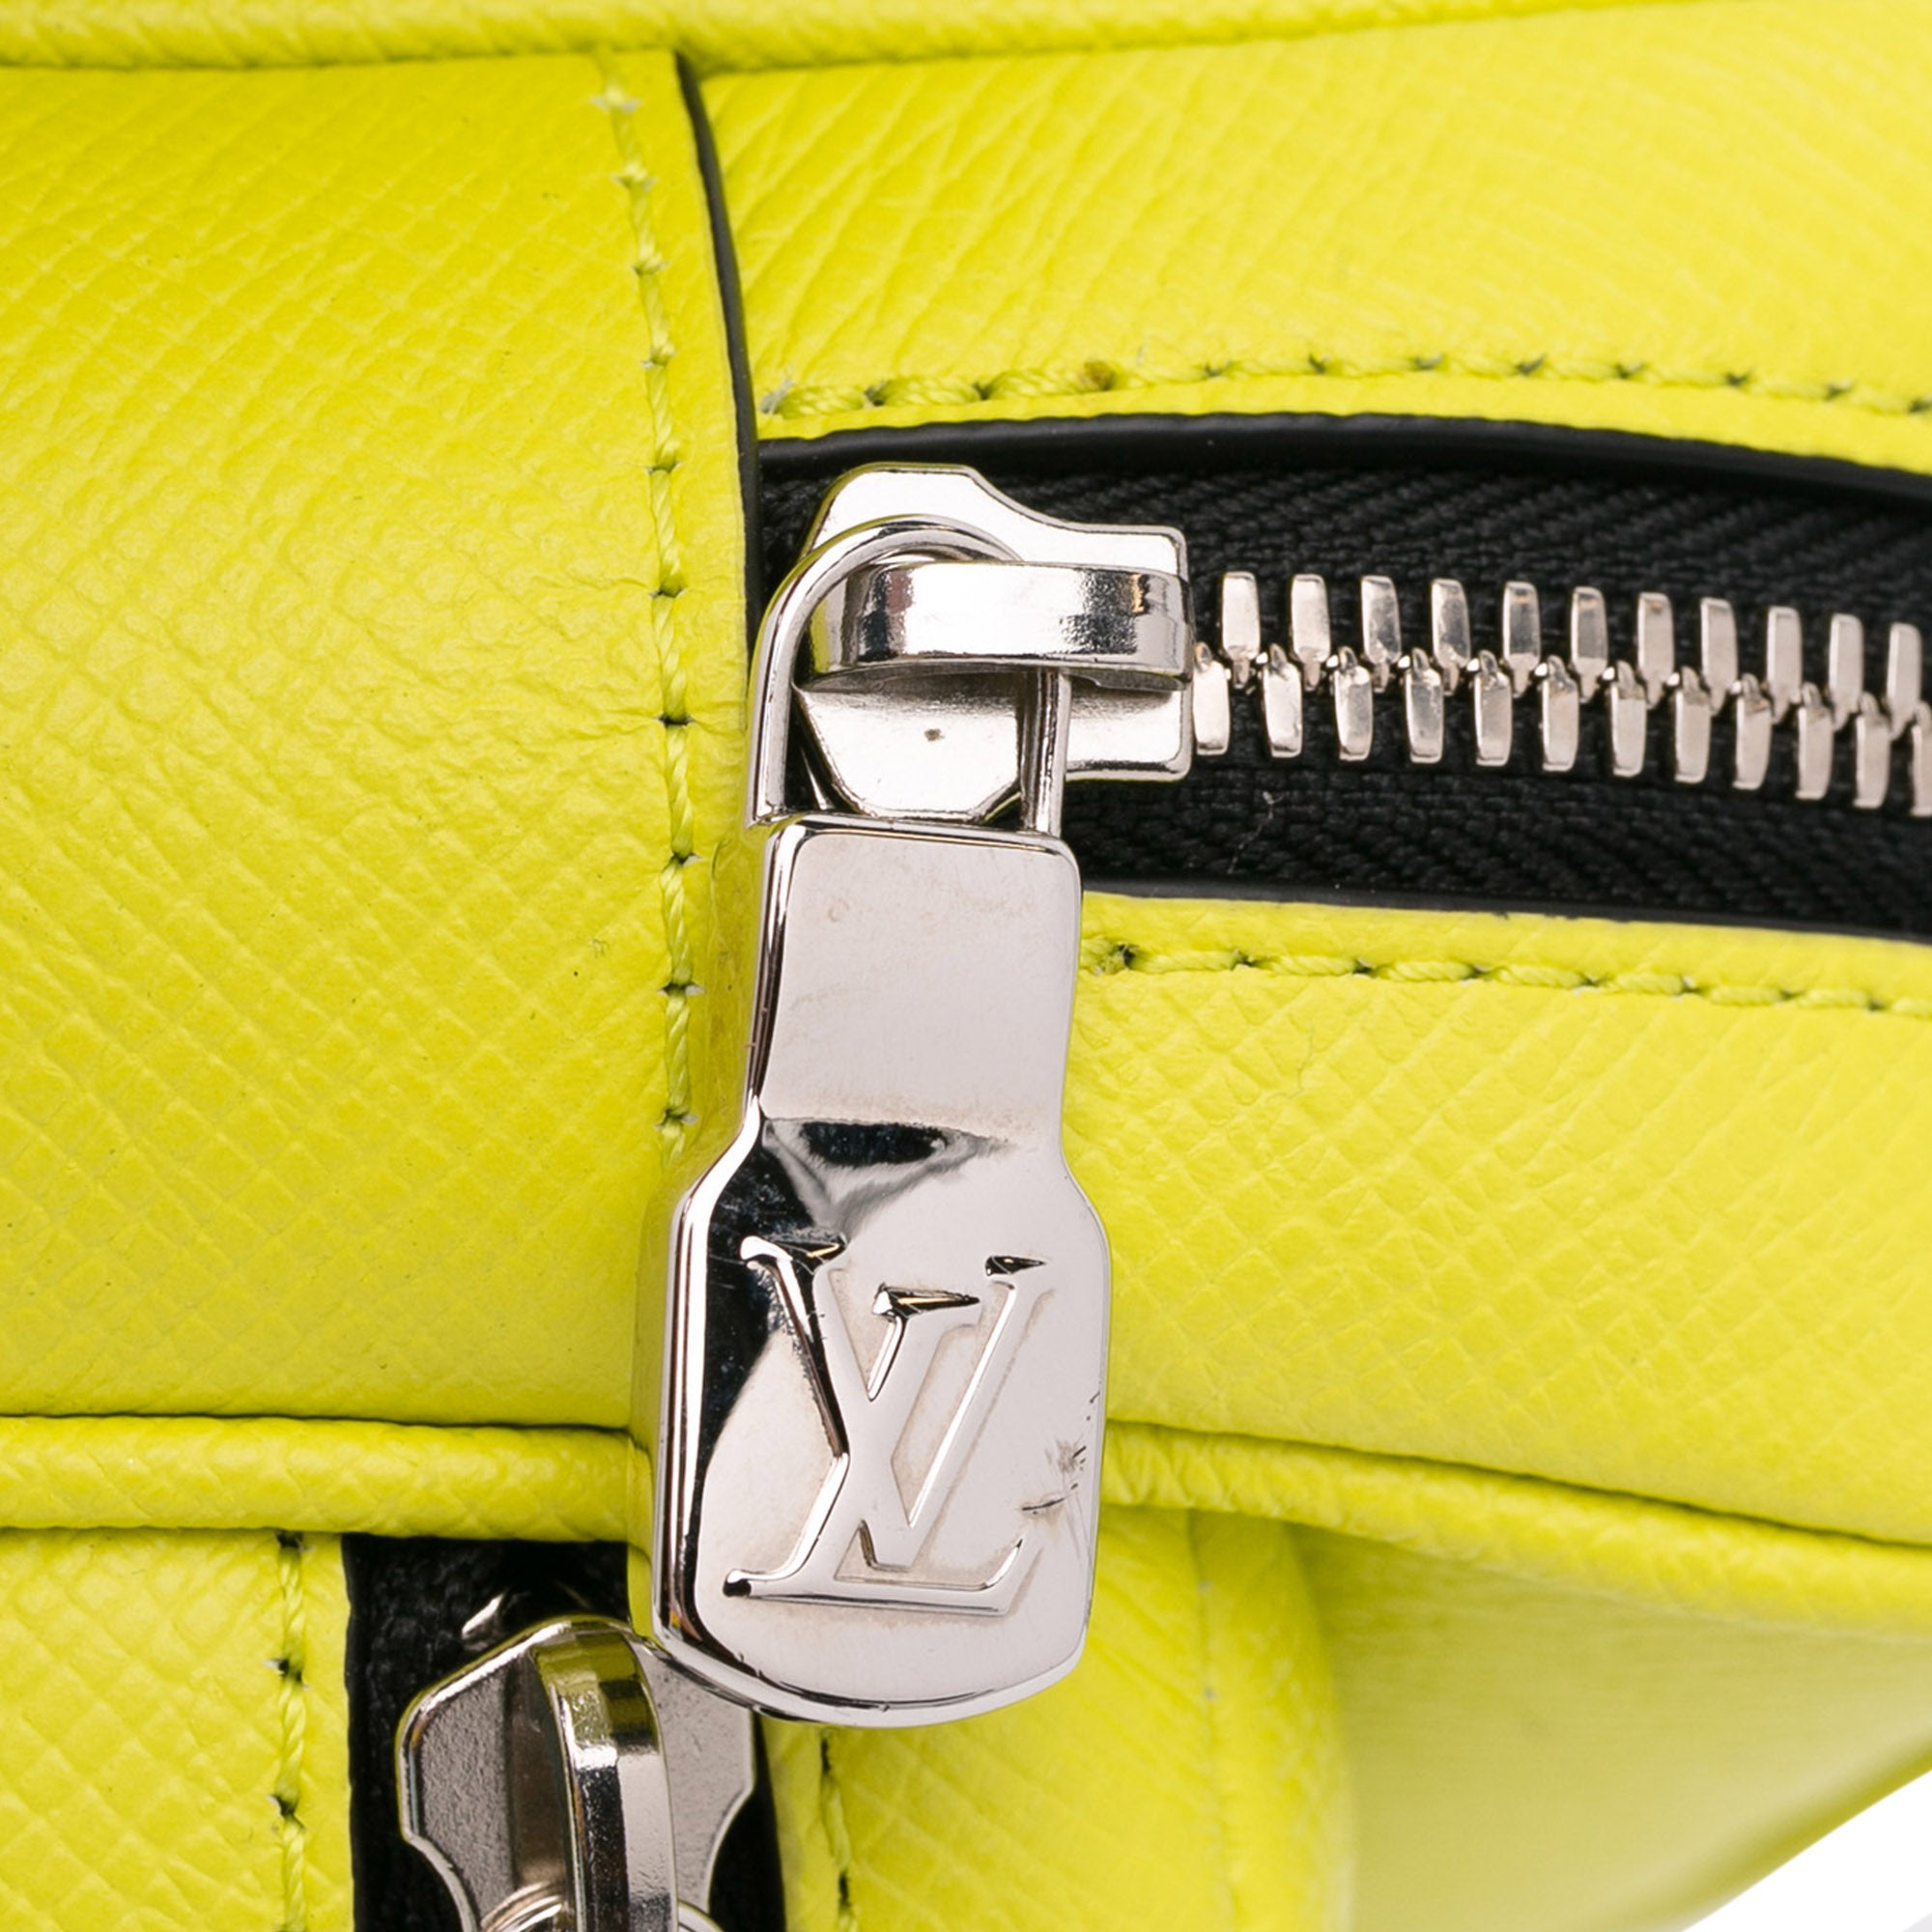 Louis Vuitton Outdoor Messenger Bag Monogram Taigarama Yellow